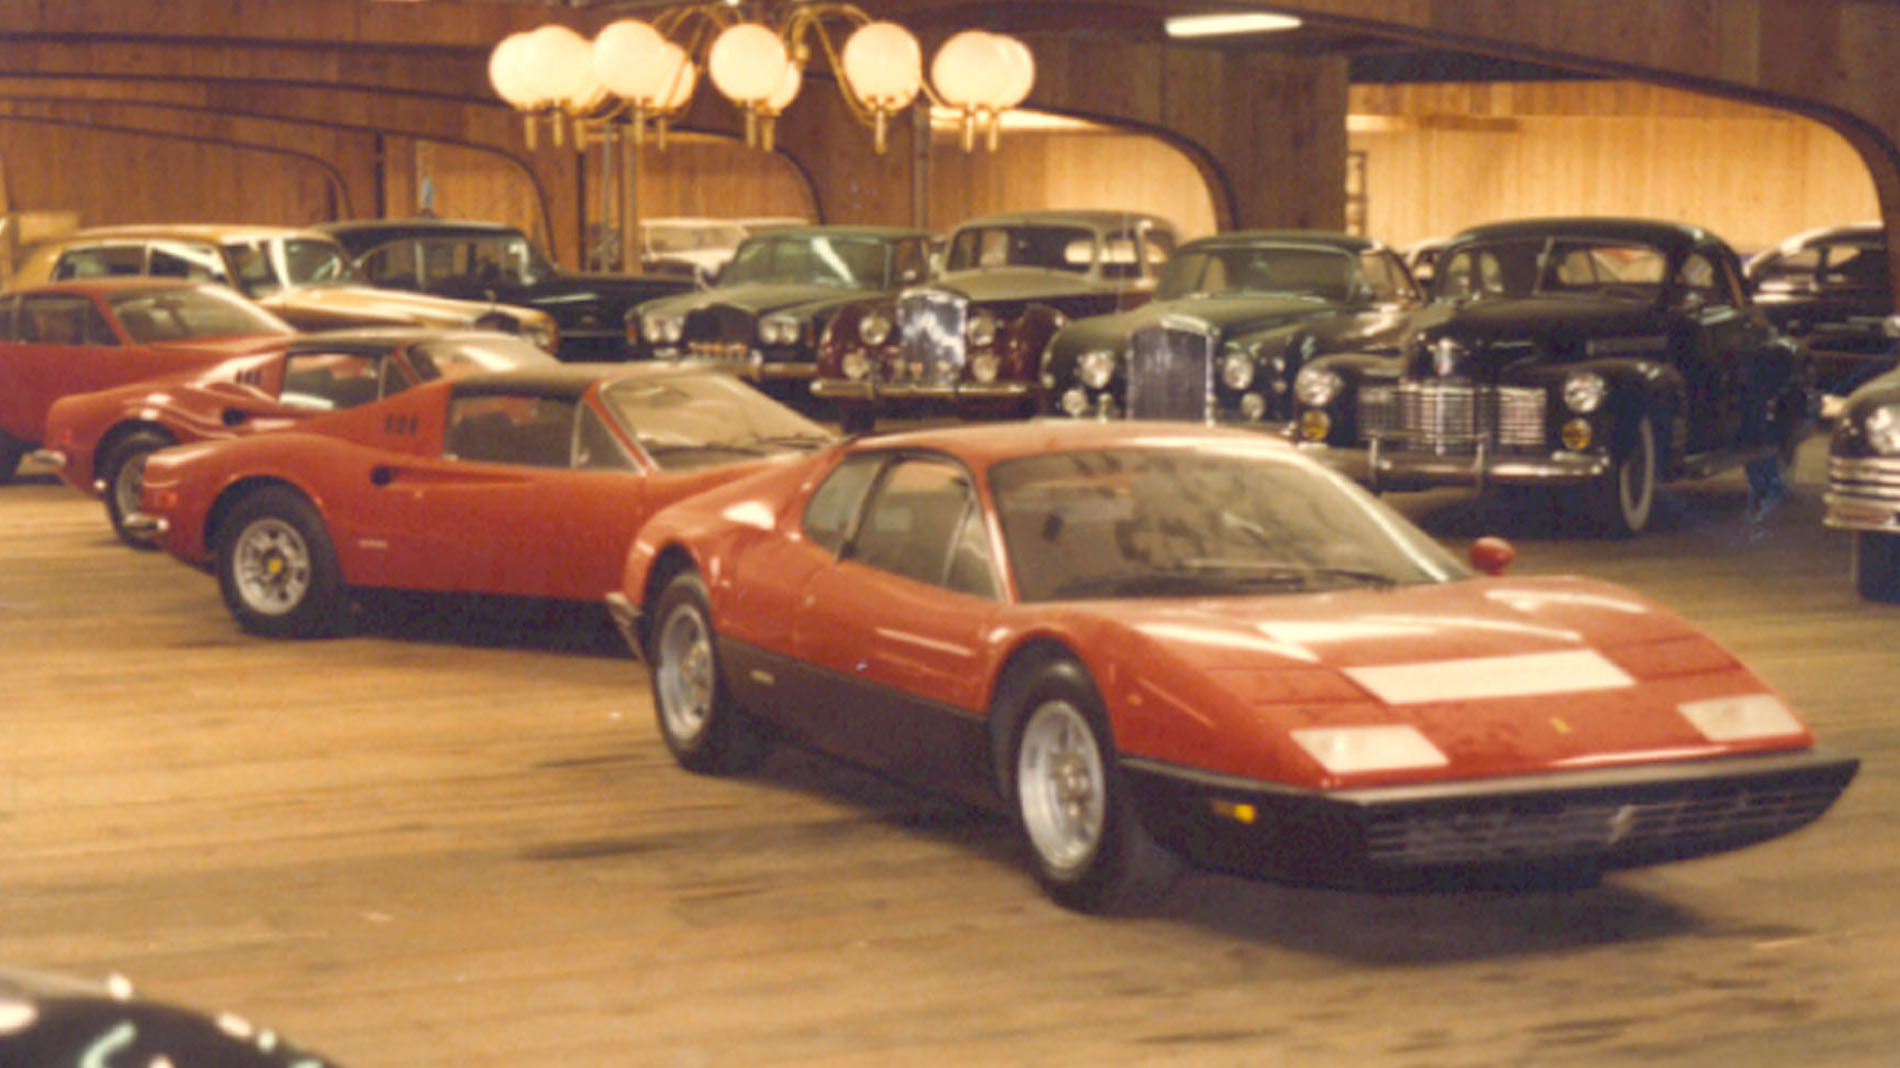 4. Holis Ferrari's in Office warehouse